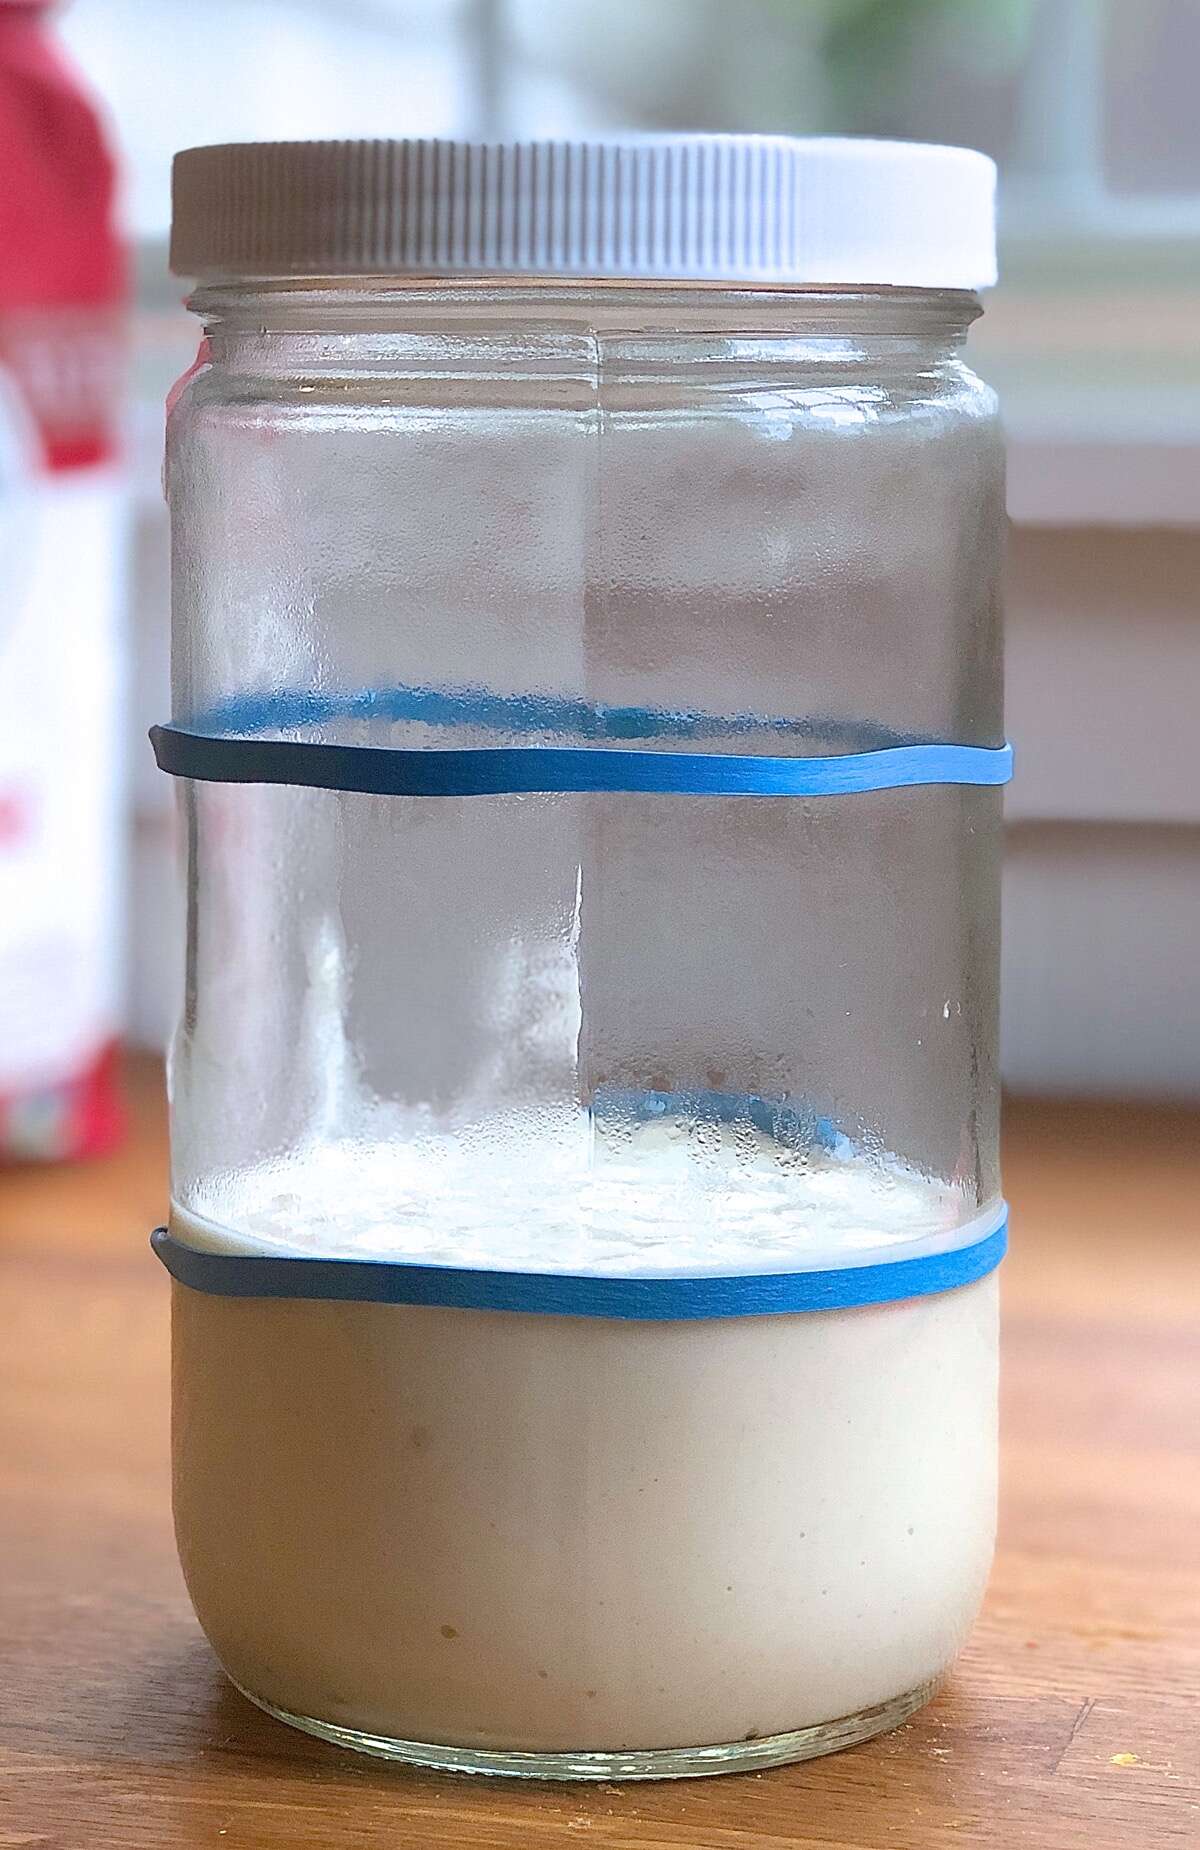 Sourdough starter in a glass jar on a counter, unrisen.